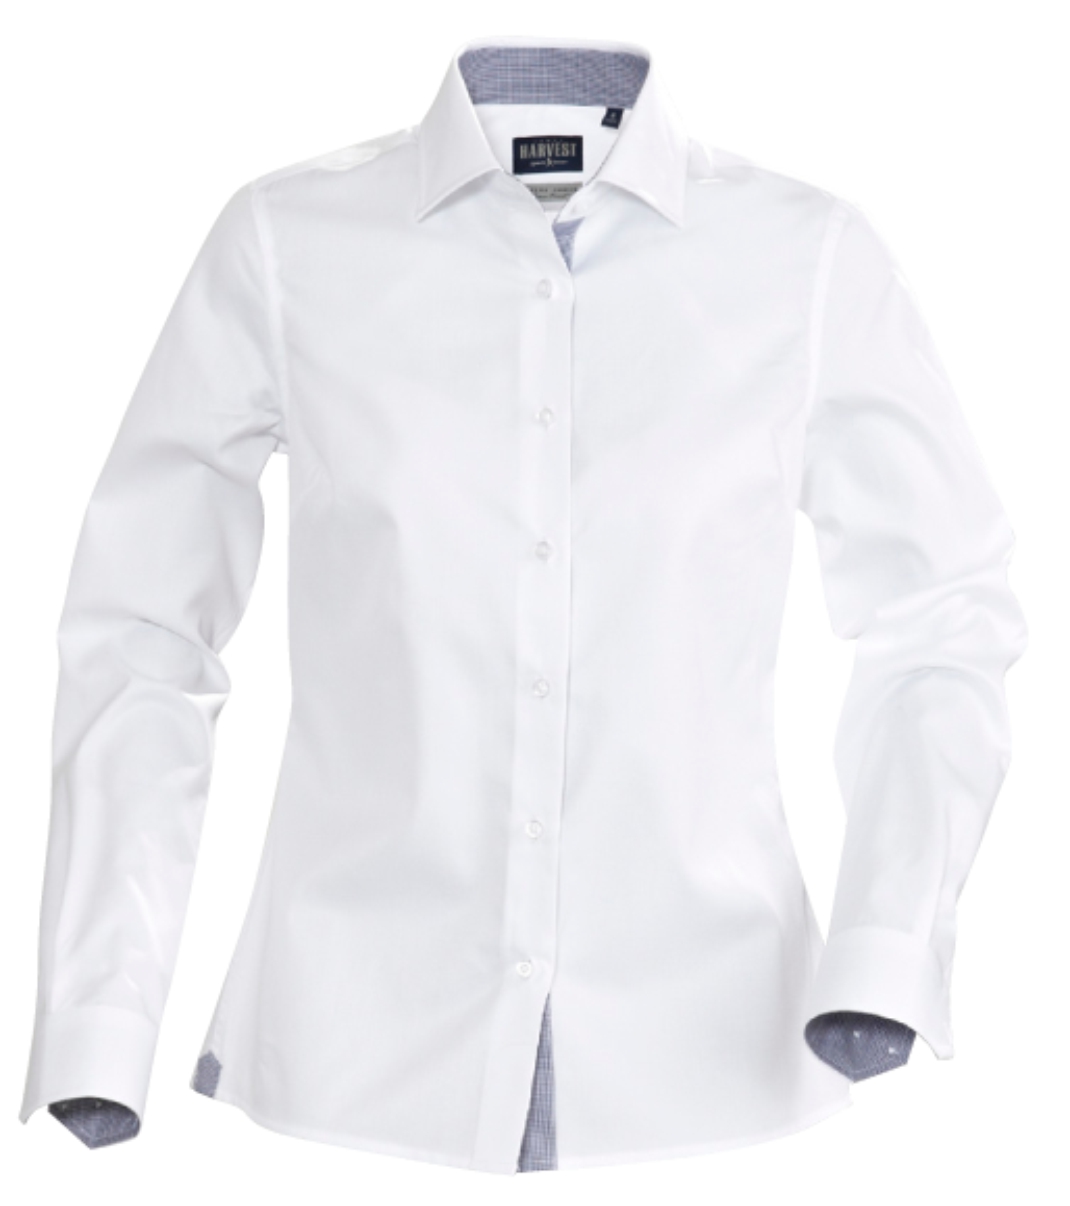 James Harvest Baltimore-Ladies high quality cotton shirt